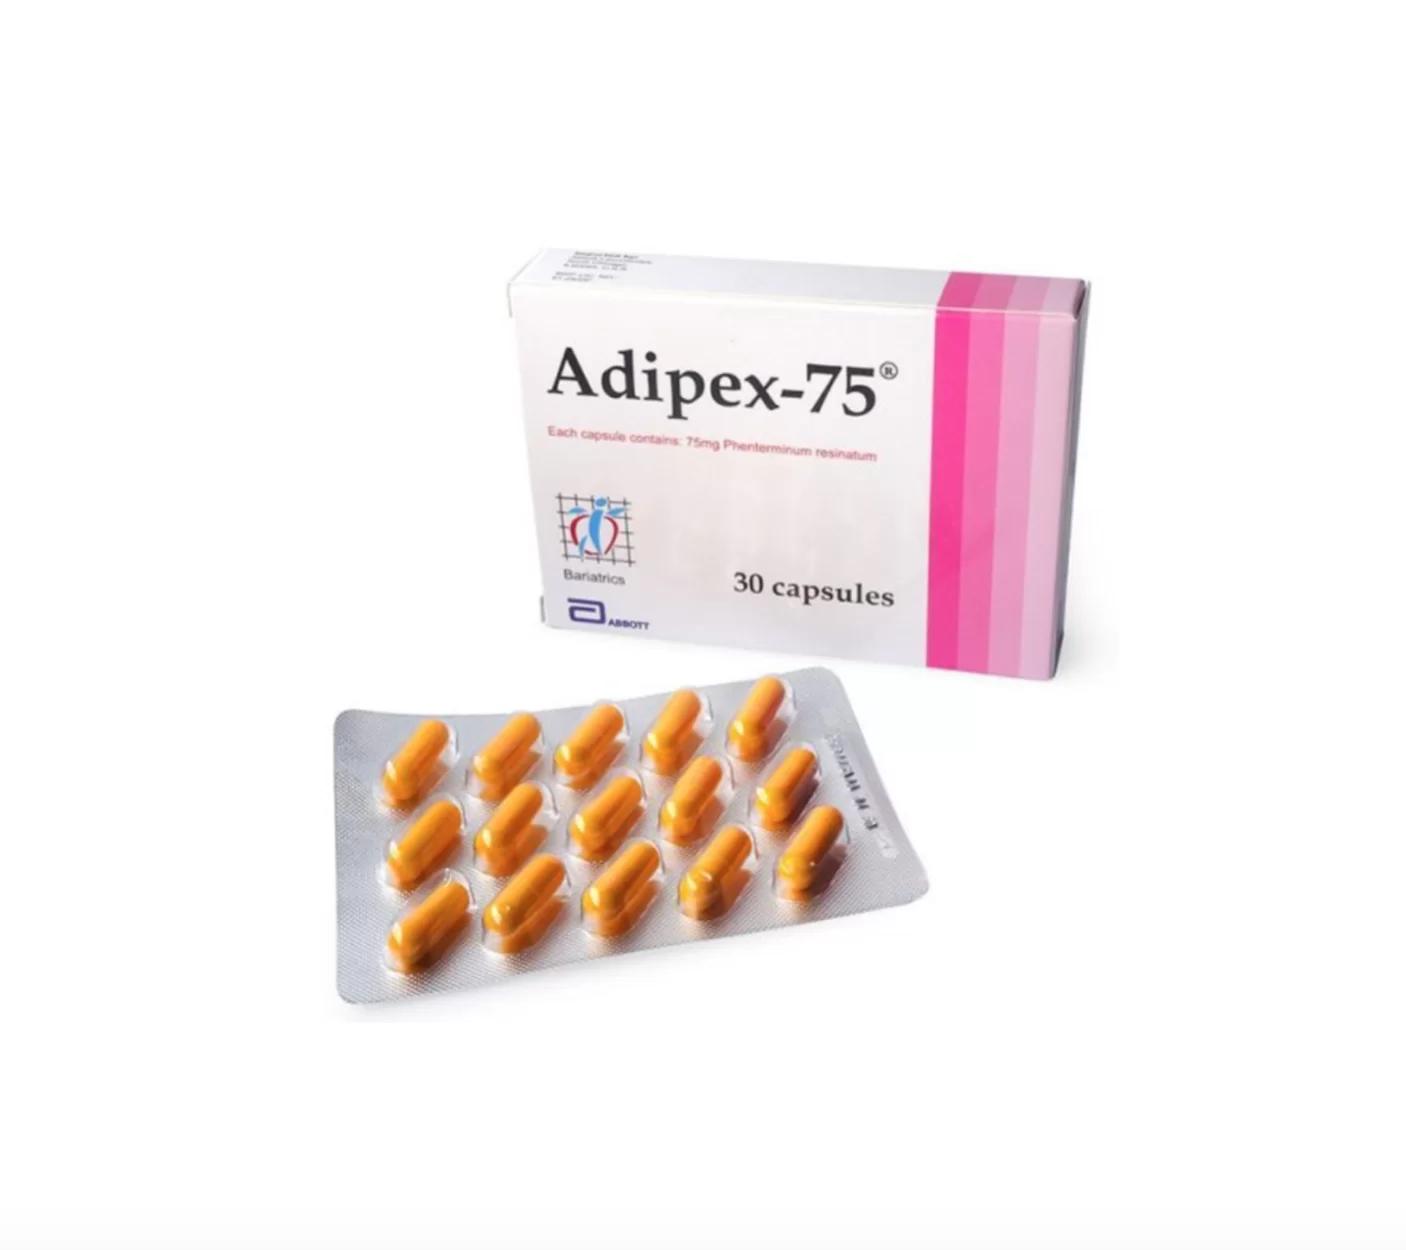 Adipex phentermine kopen nederland